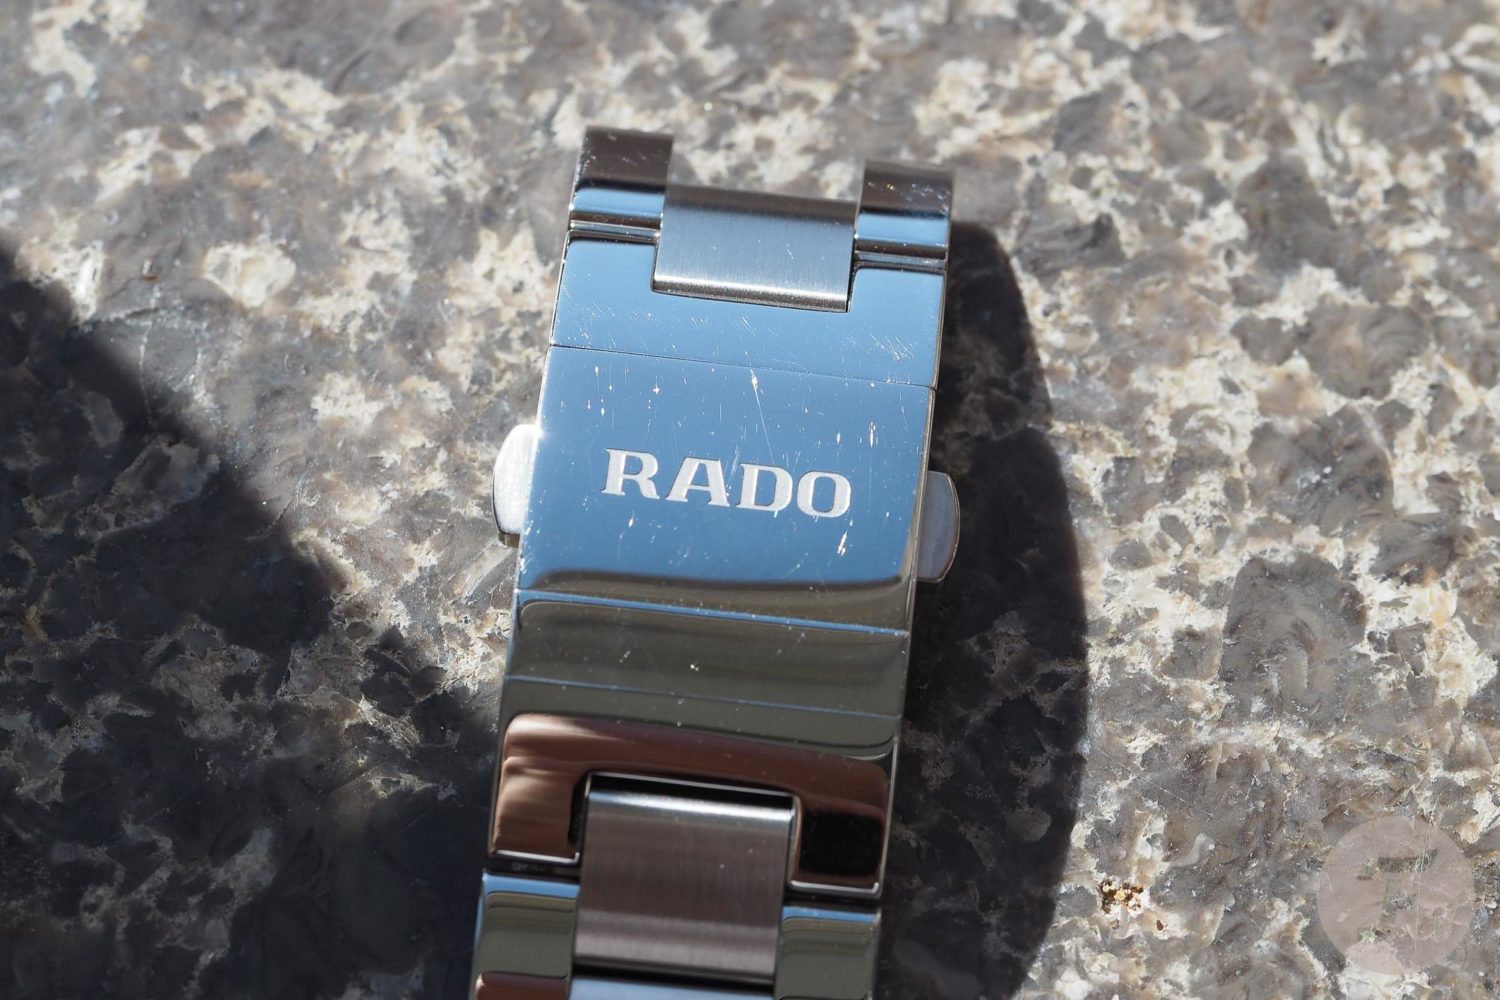 Hands-On: The Rado Golden Horse